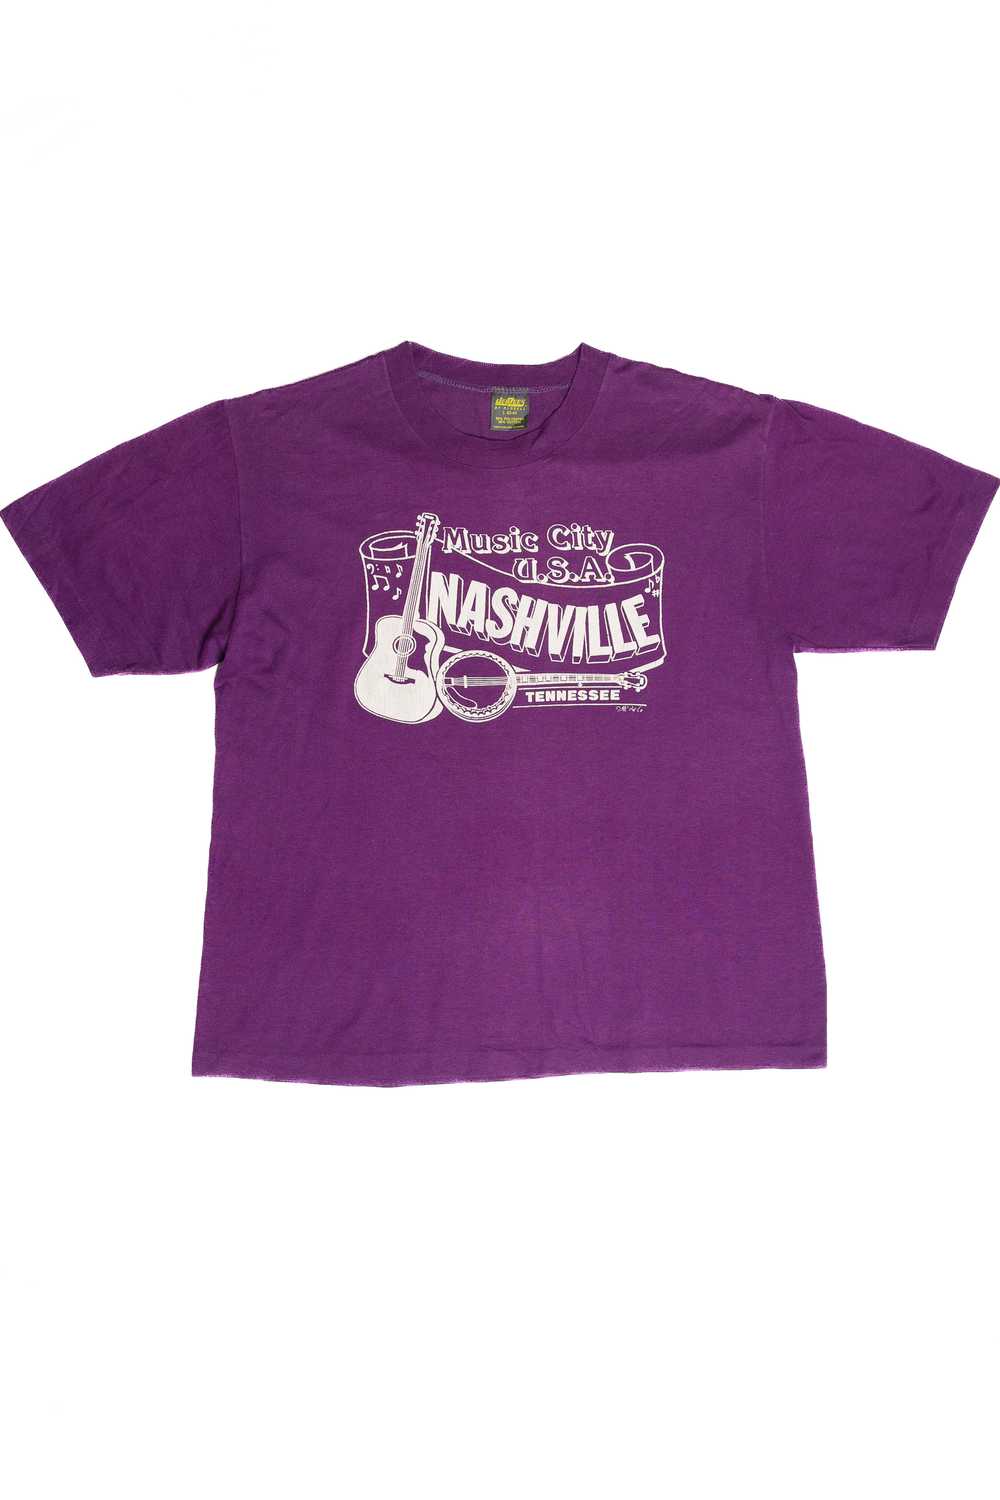 Vintage Nashville Music City T-Shirt - image 1